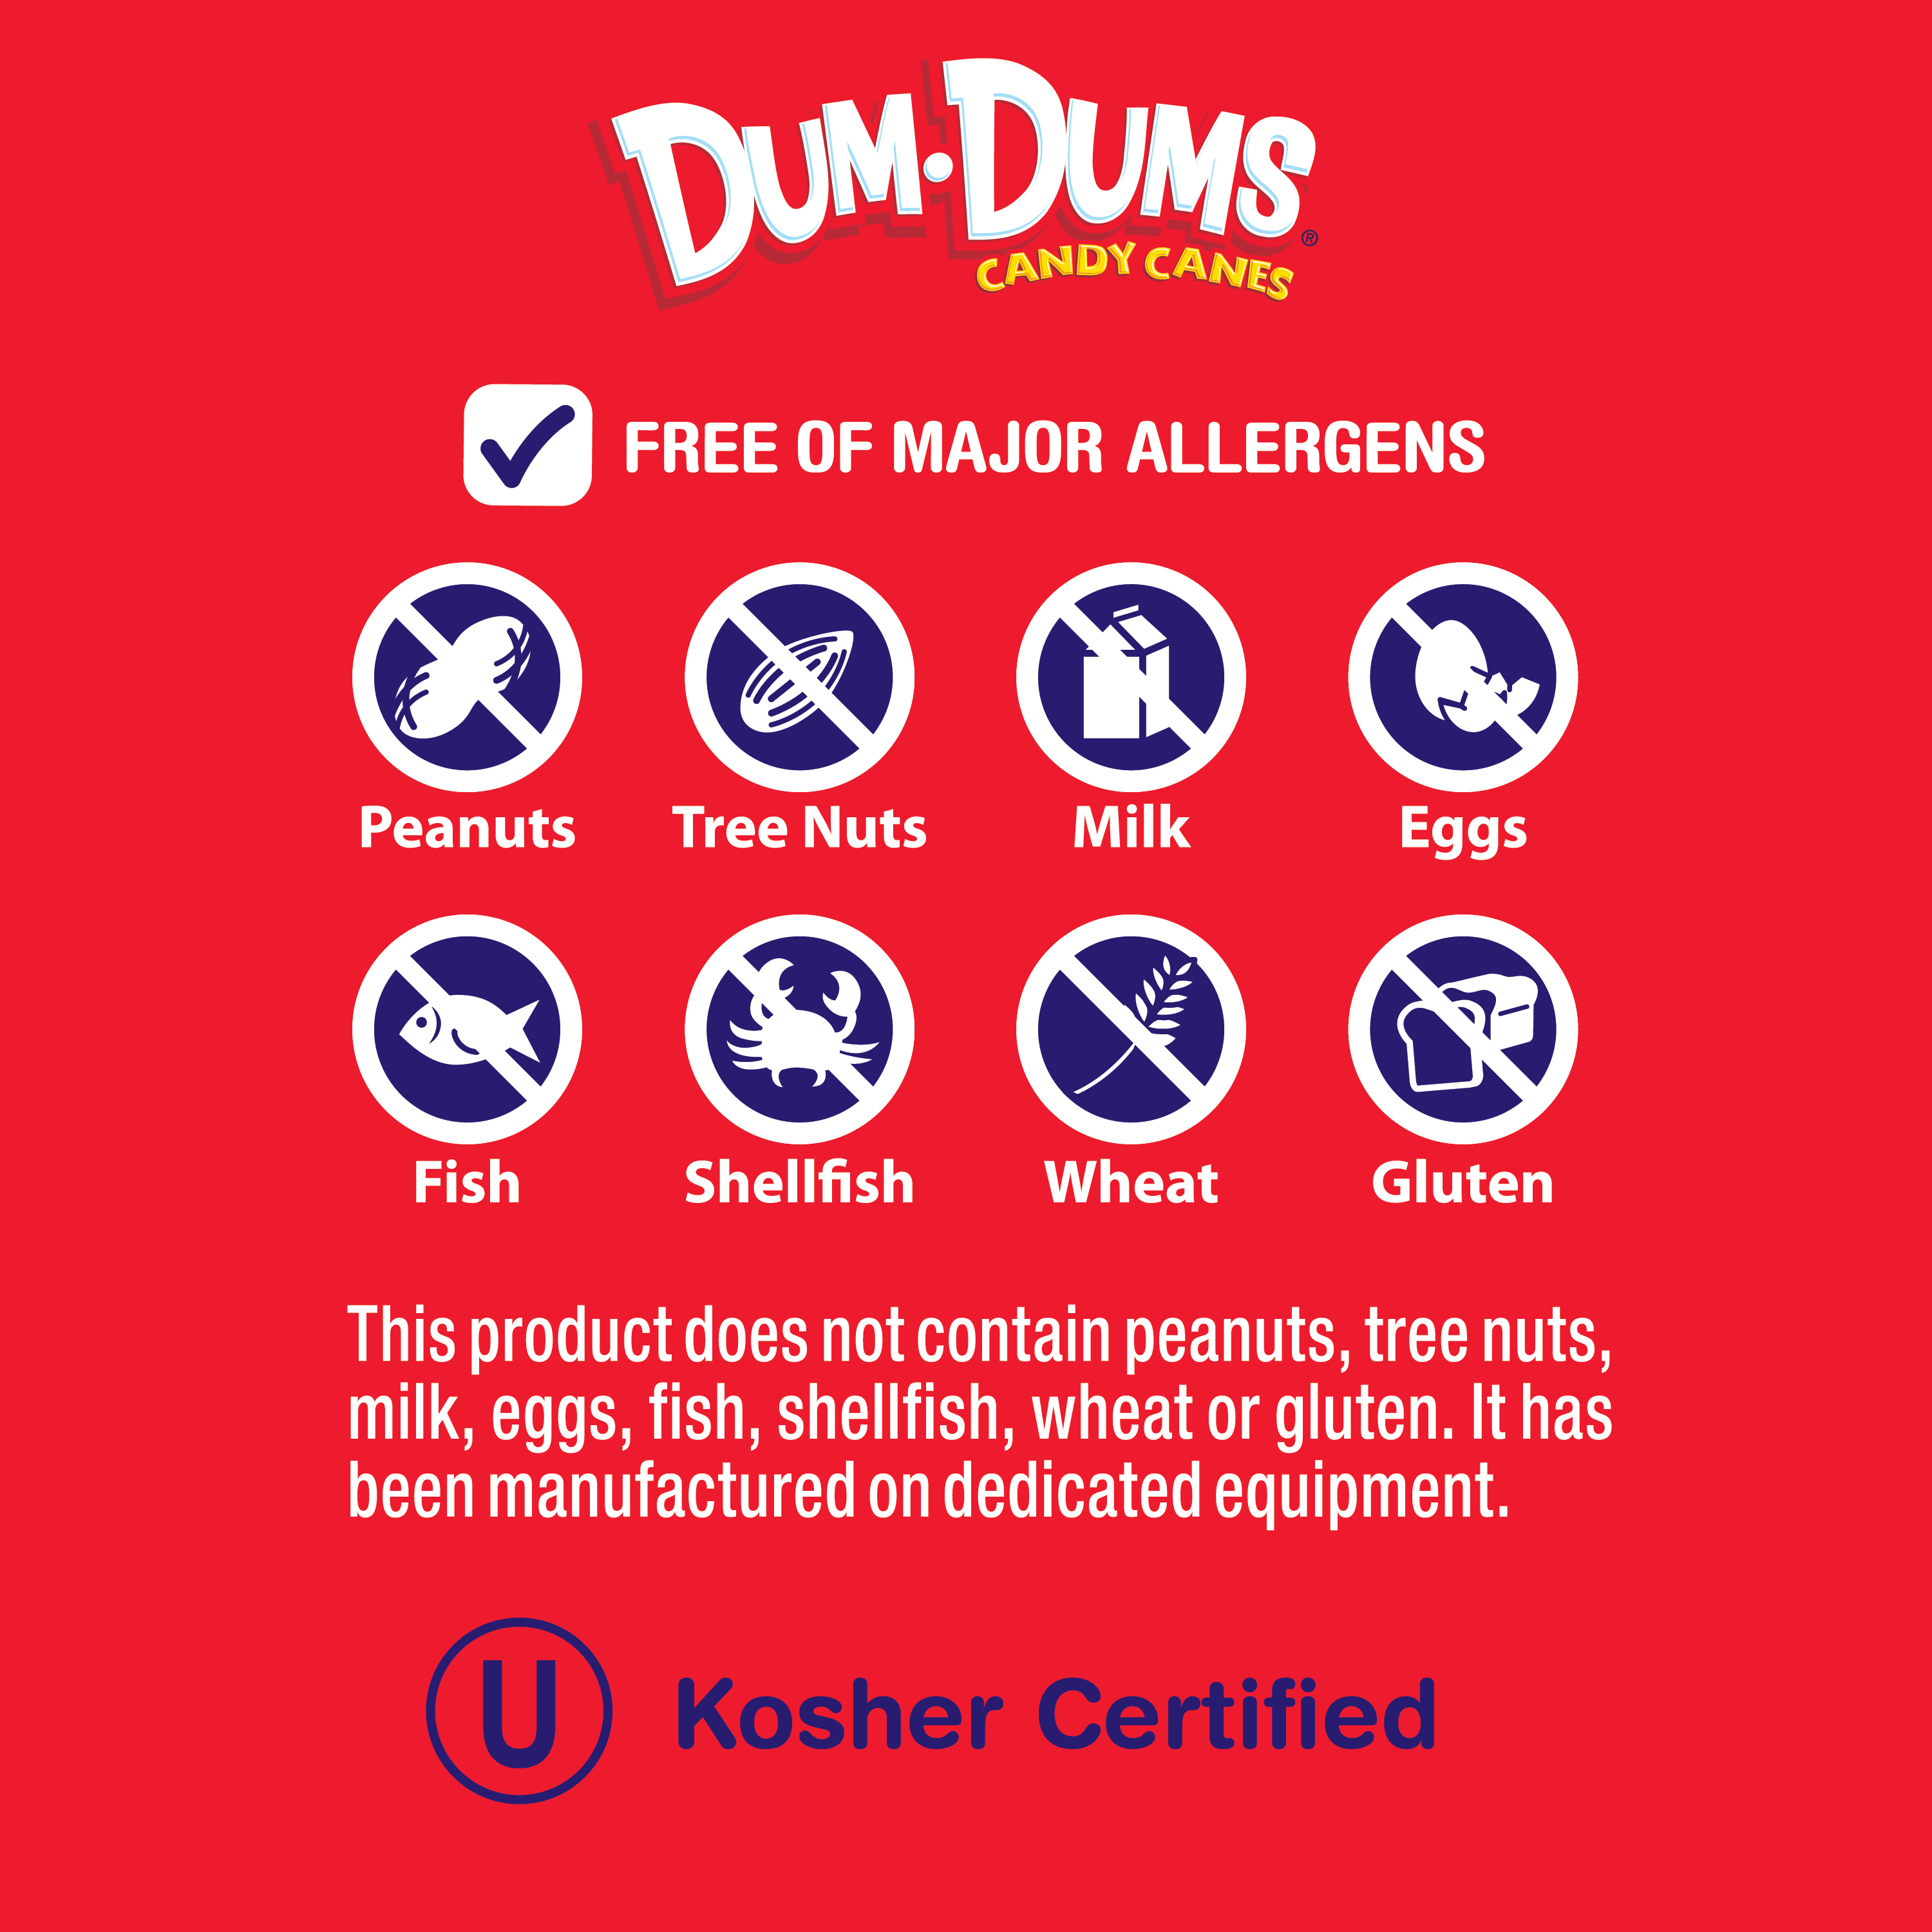 Dum Dums Free of Major Allergens Original Flavor Mix Lollipops, Party Candy, 16 oz. Bag - image 4 of 8